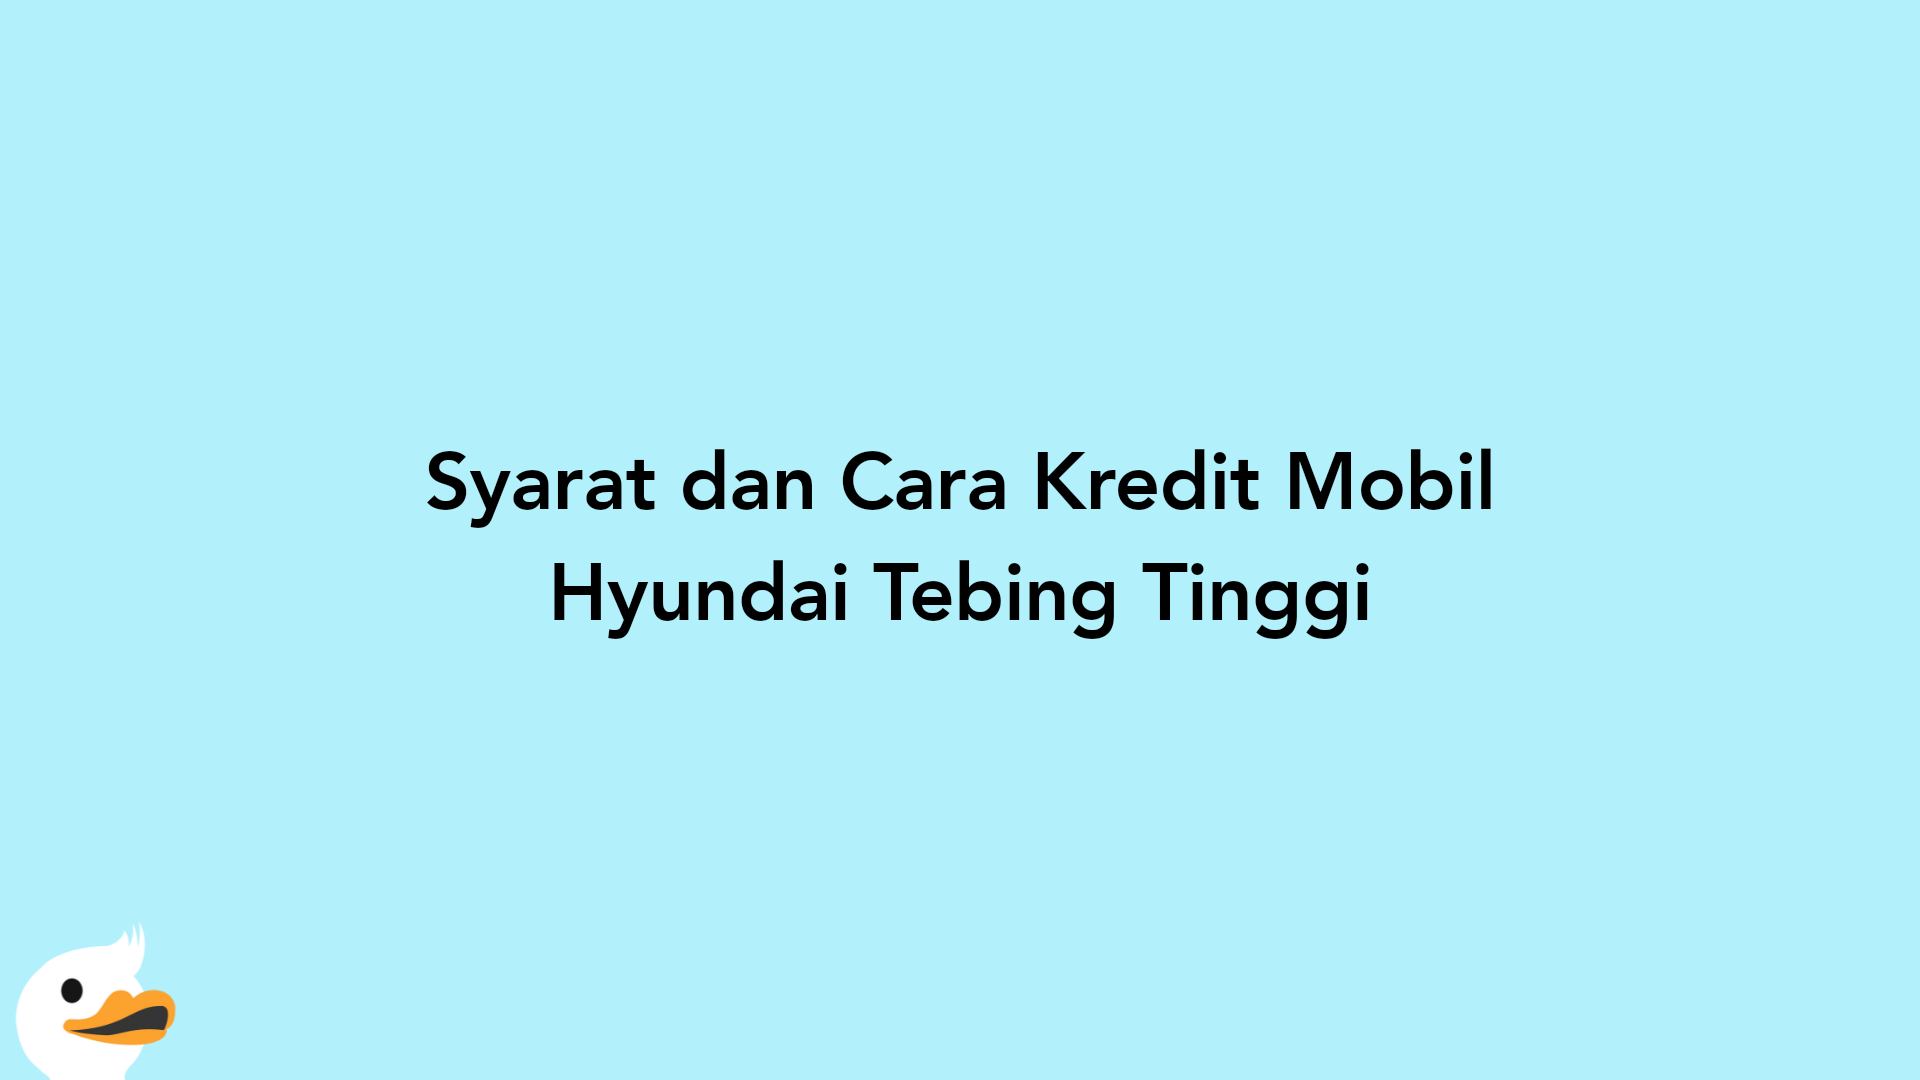 Syarat dan Cara Kredit Mobil Hyundai Tebing Tinggi